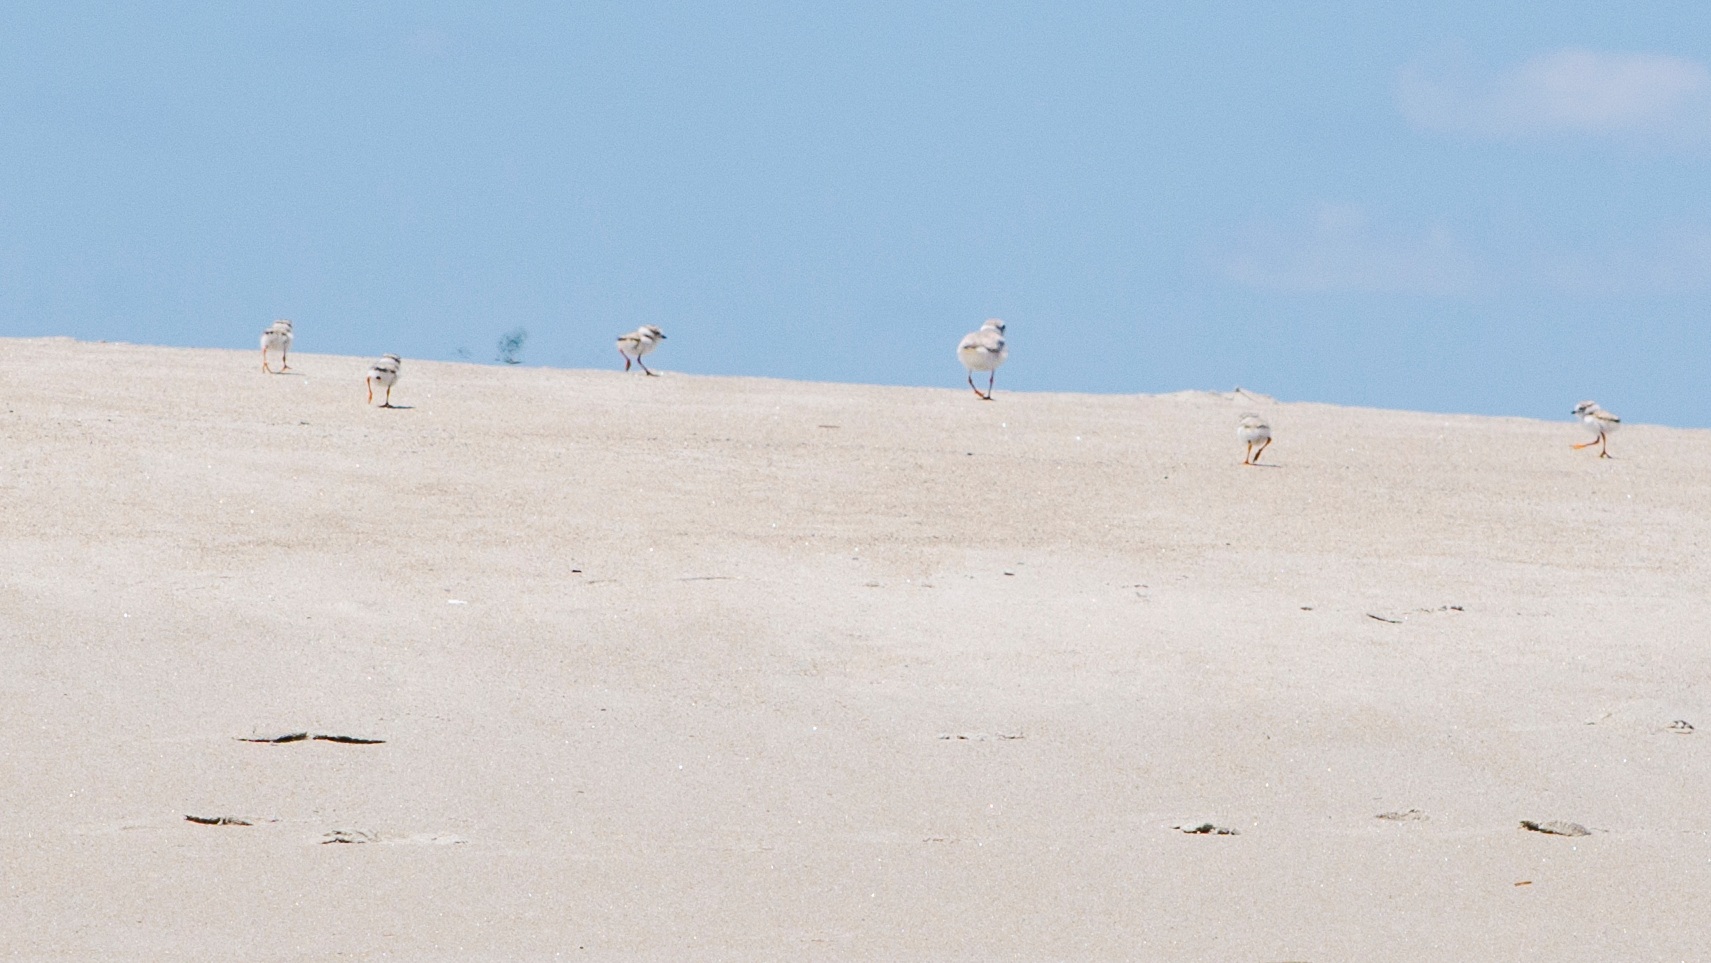   On the coast, shorebirds  and other wildlife flourish  